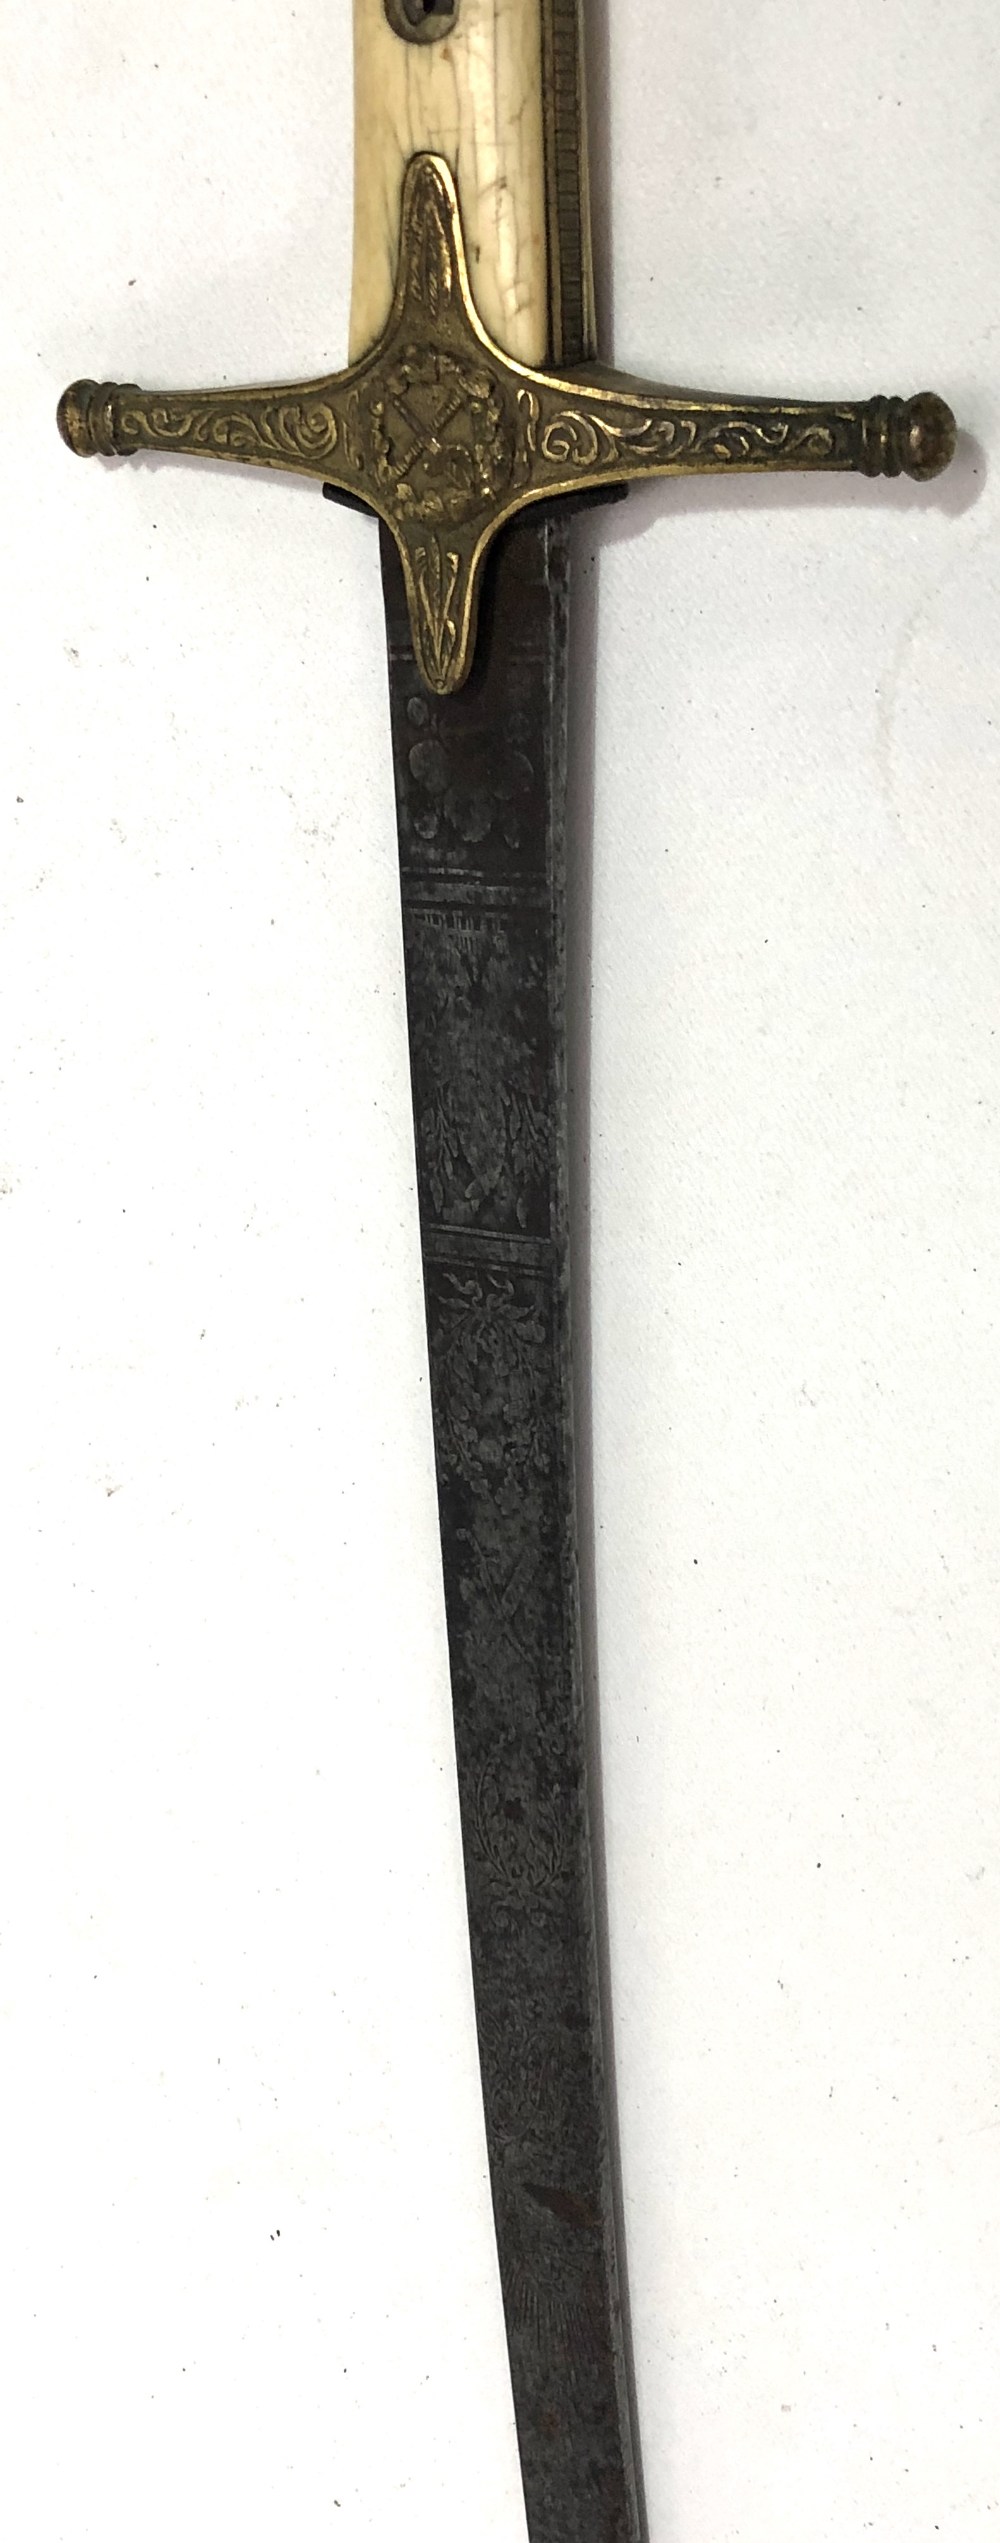 19th Century ivory handled Mameluke sword with etched blade & VR monogram, length 89cm - Image 4 of 4